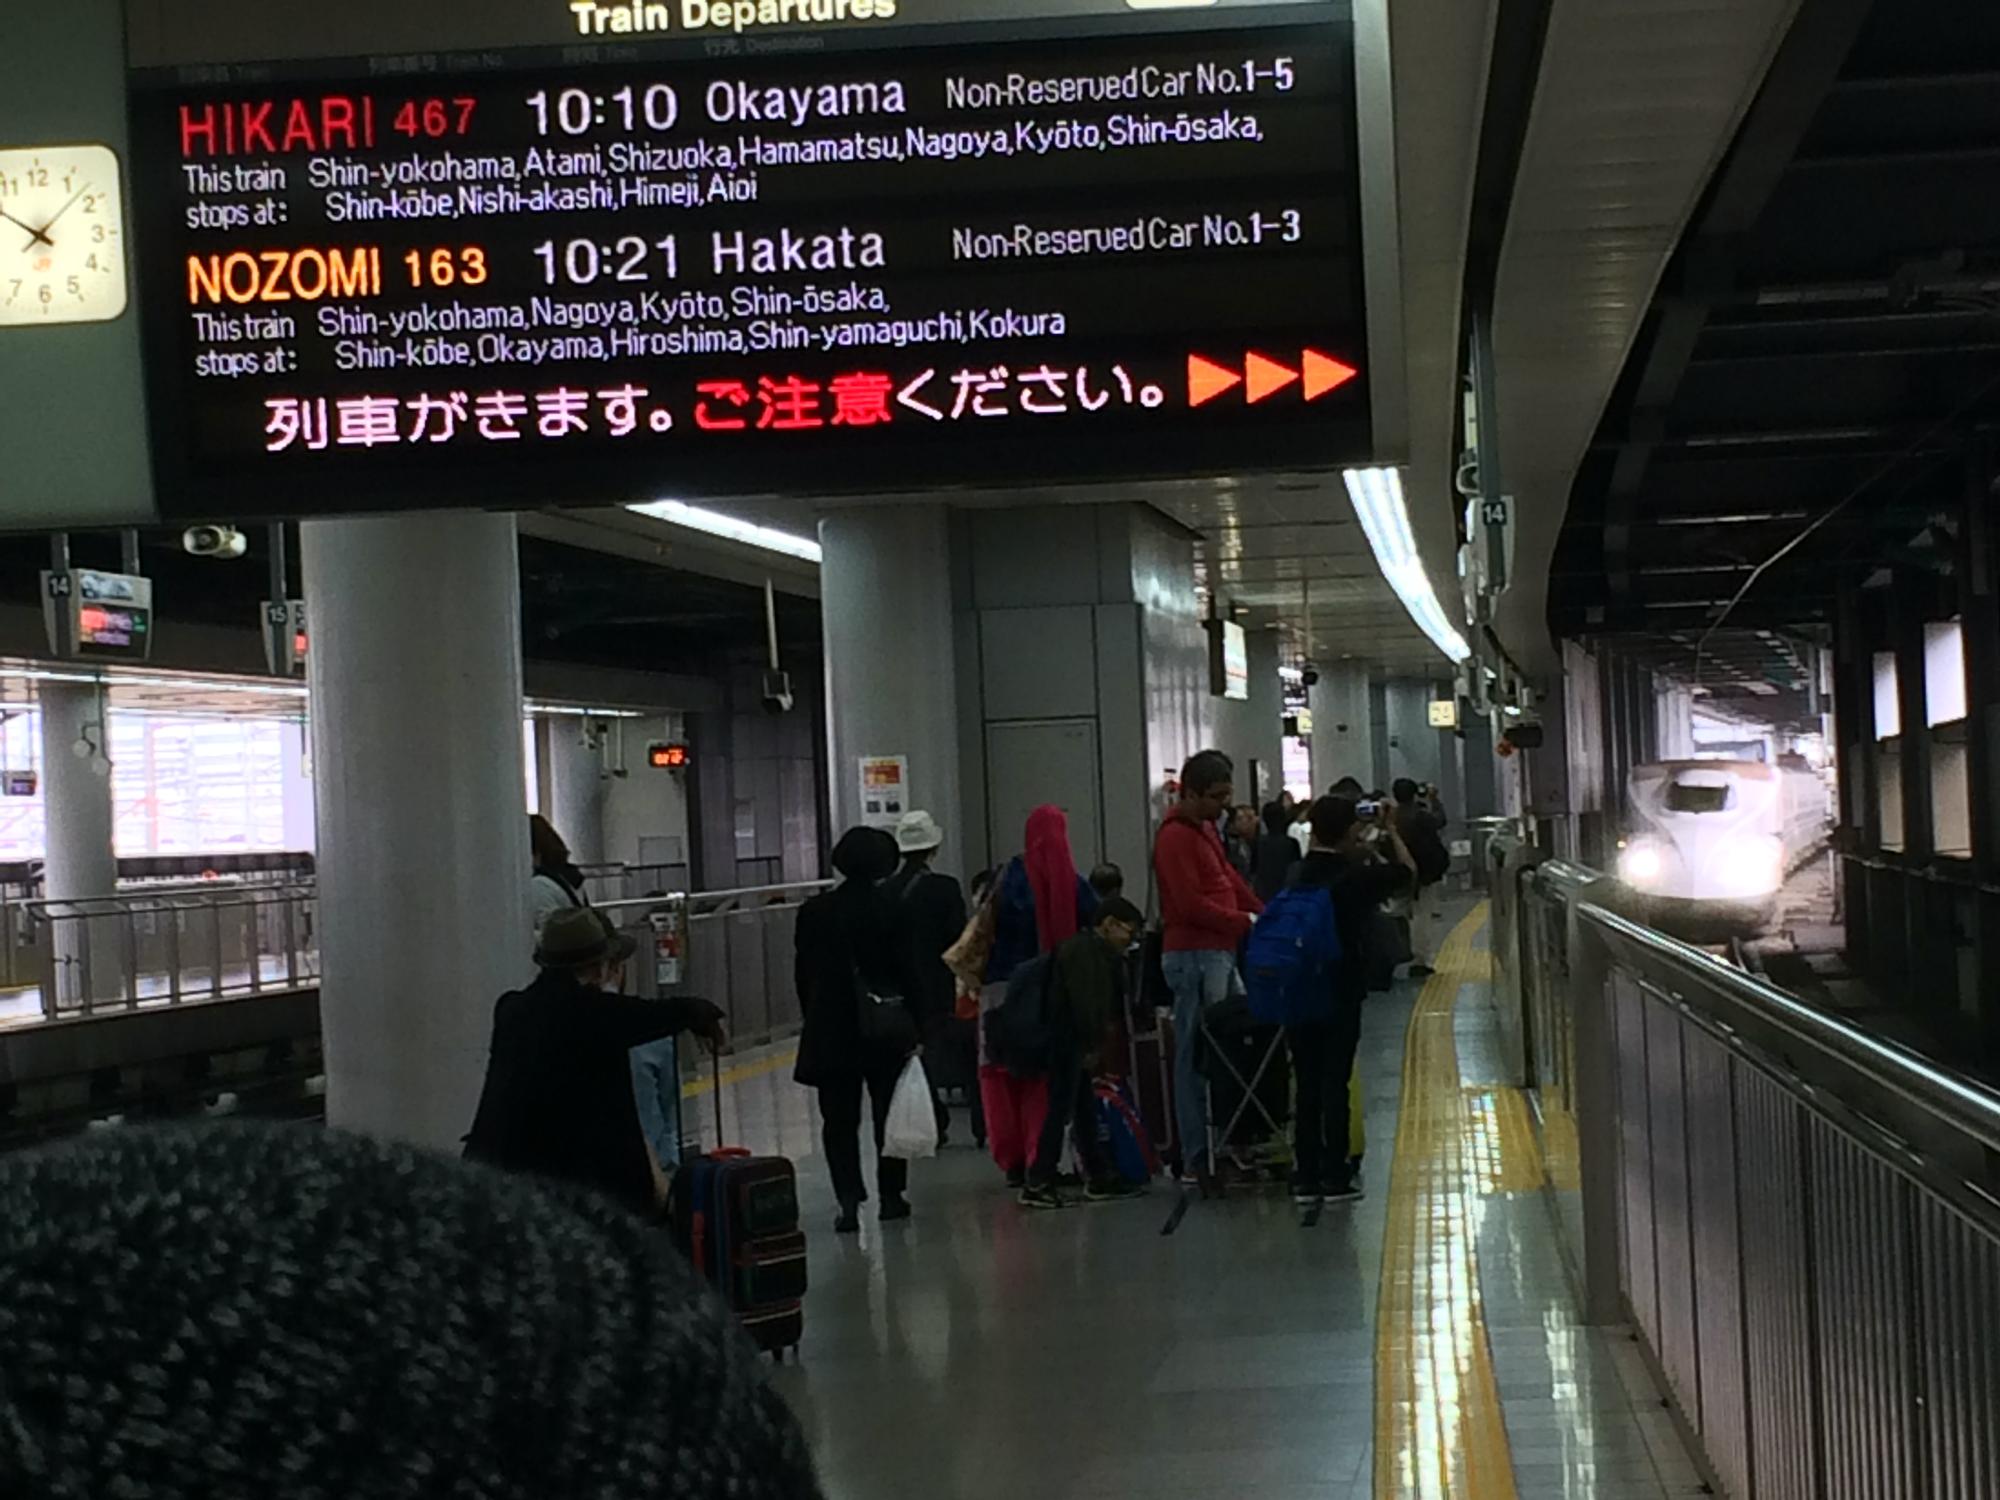 Tokyo (2015) - Bullet Train Arrival